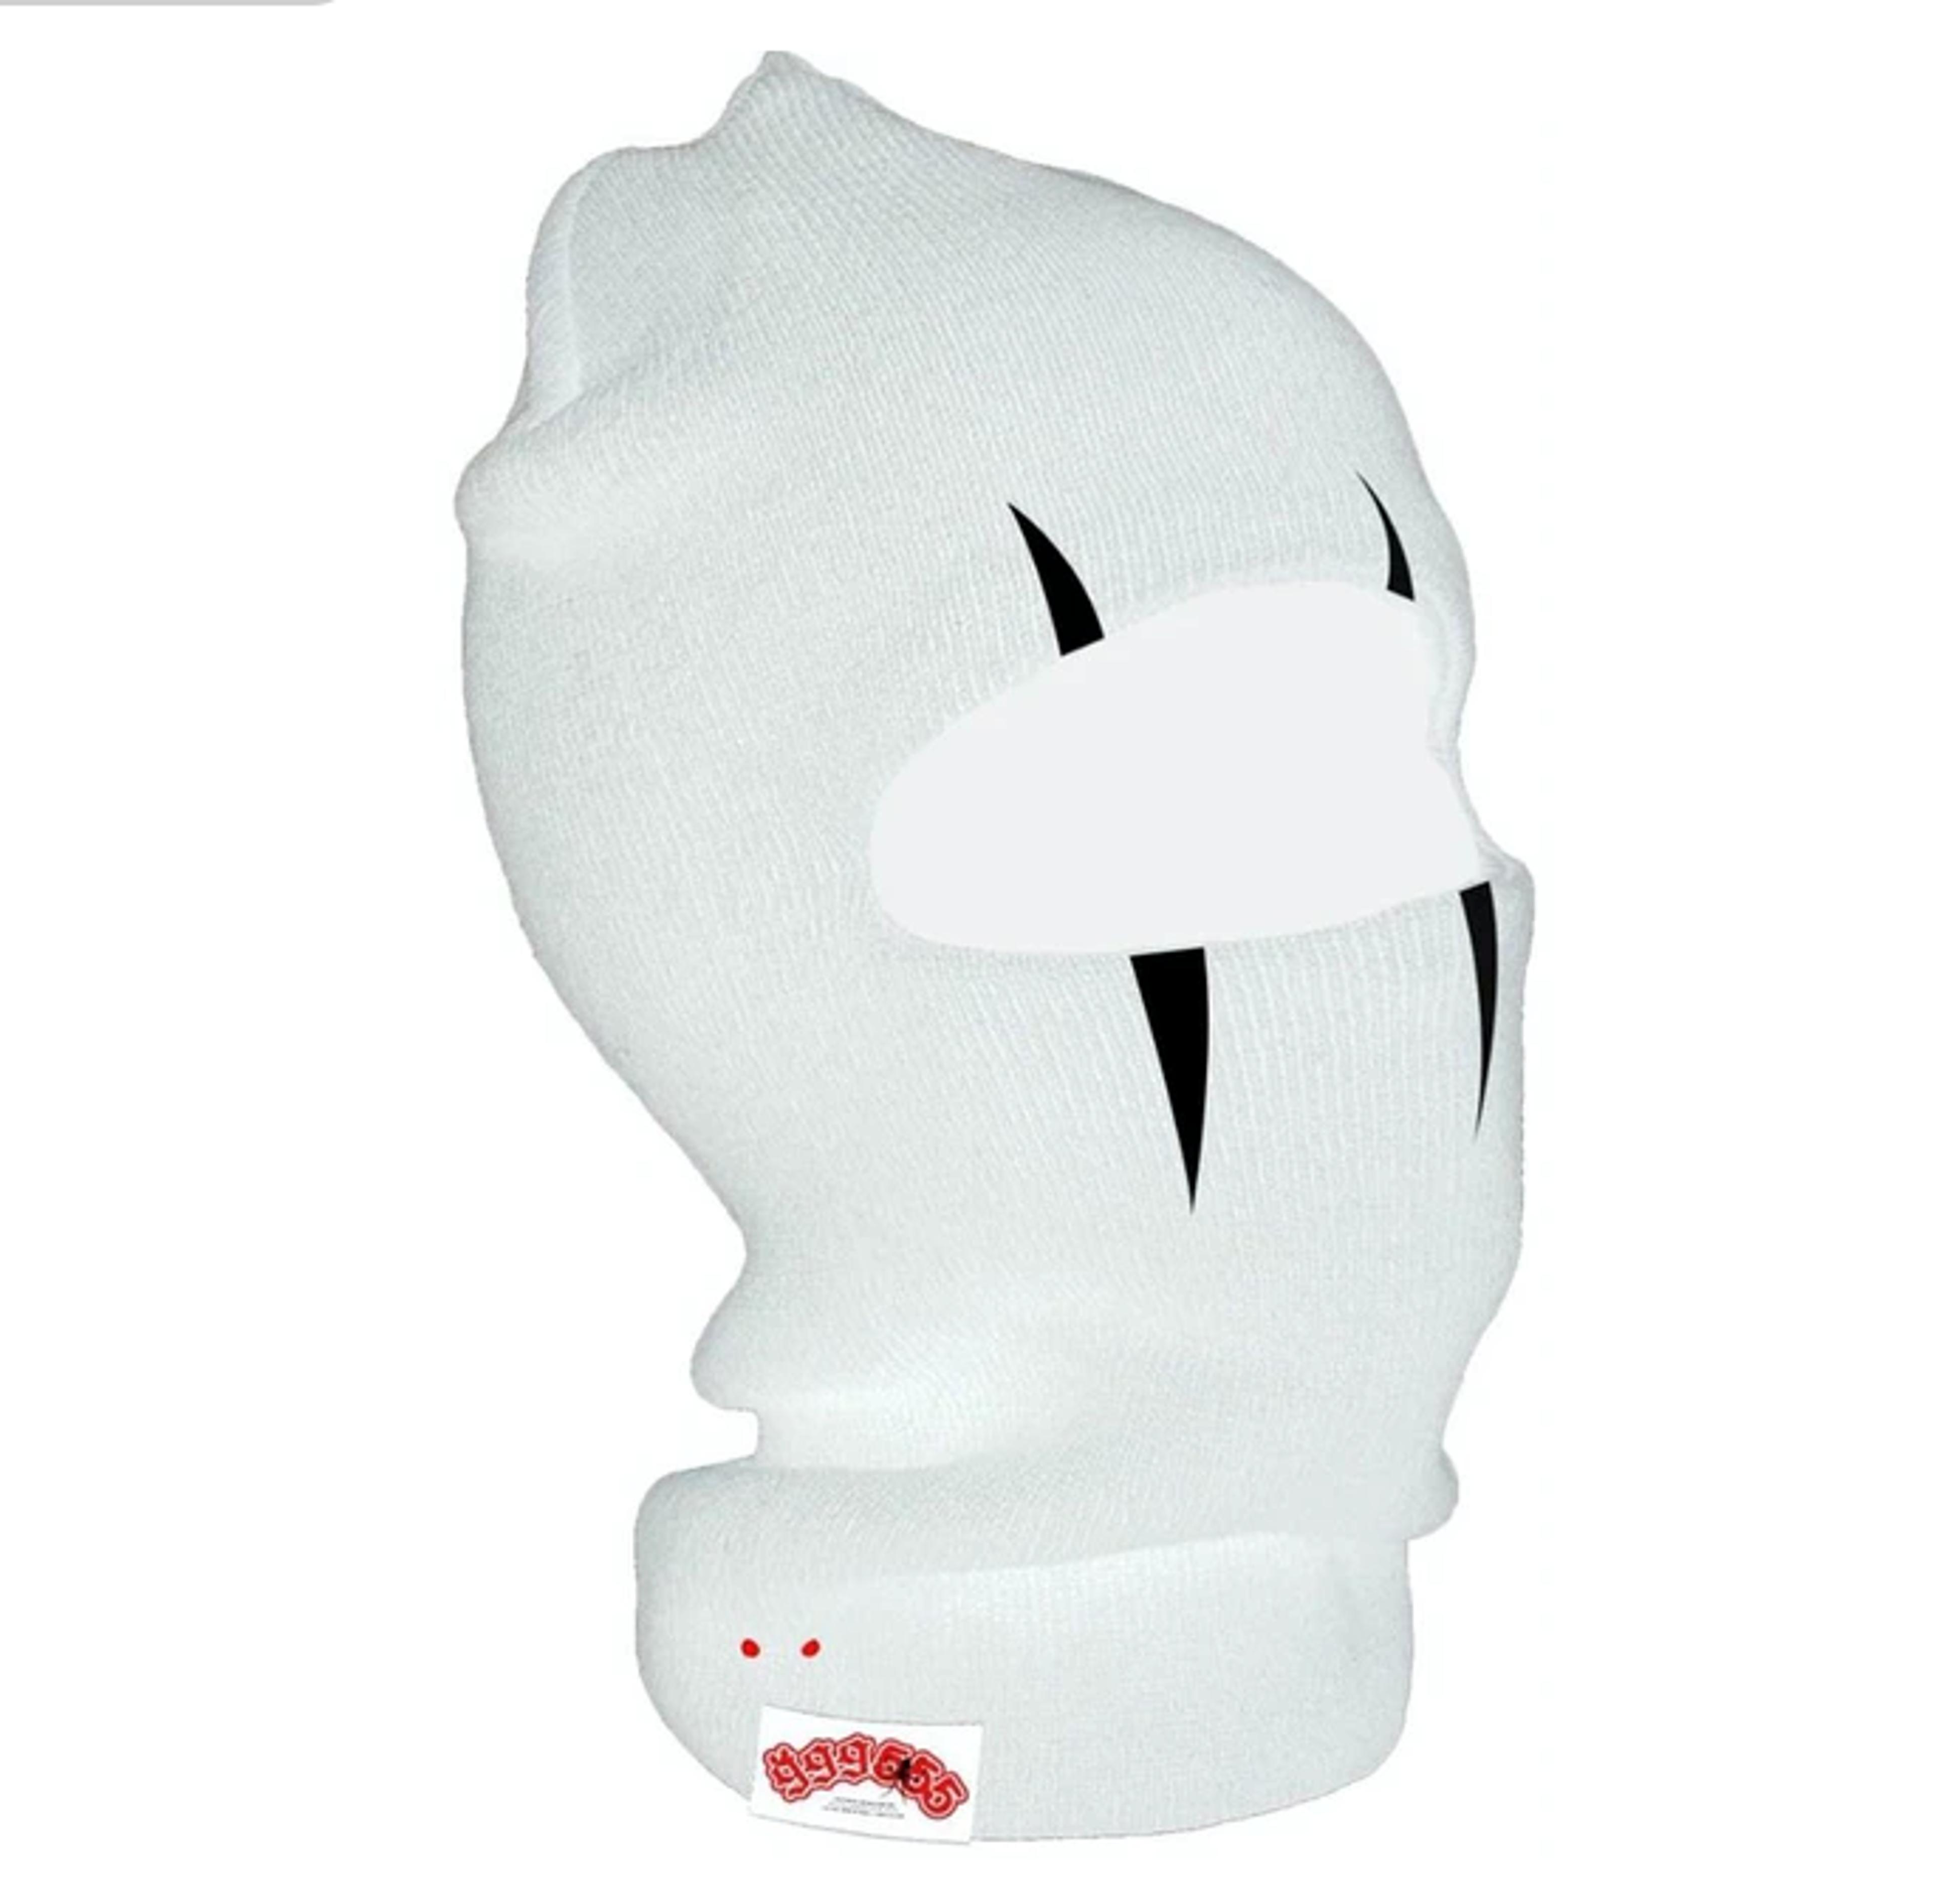 Juice Wrld x Spider Worldwide Ski Mask White